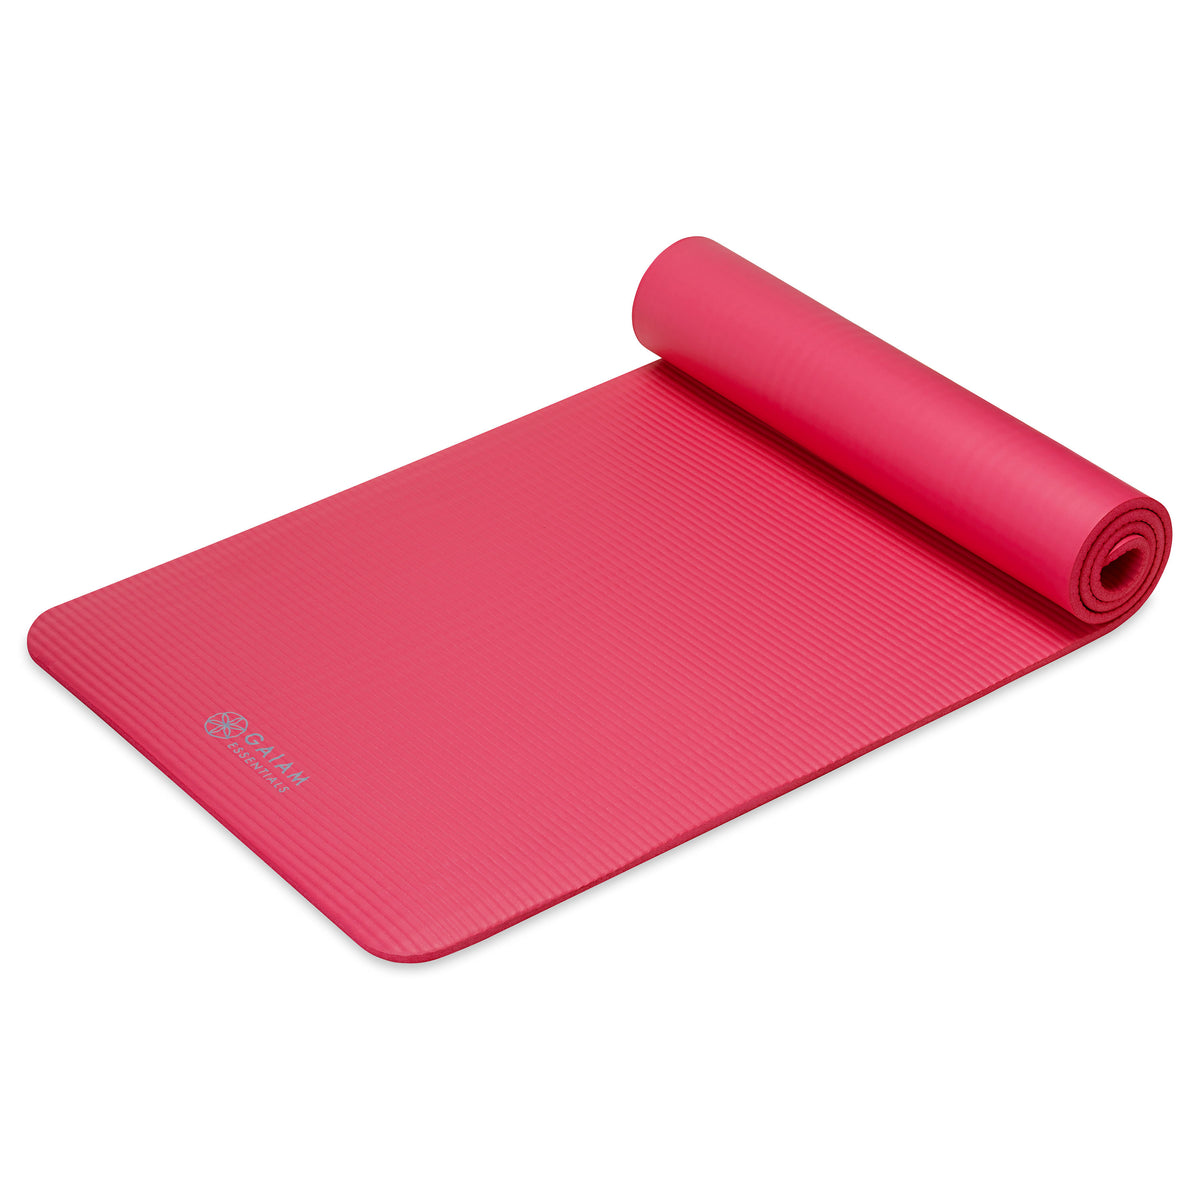 15/10MM Larger Thick High Quality NBR Yoga Mats Anti-slip Blanket